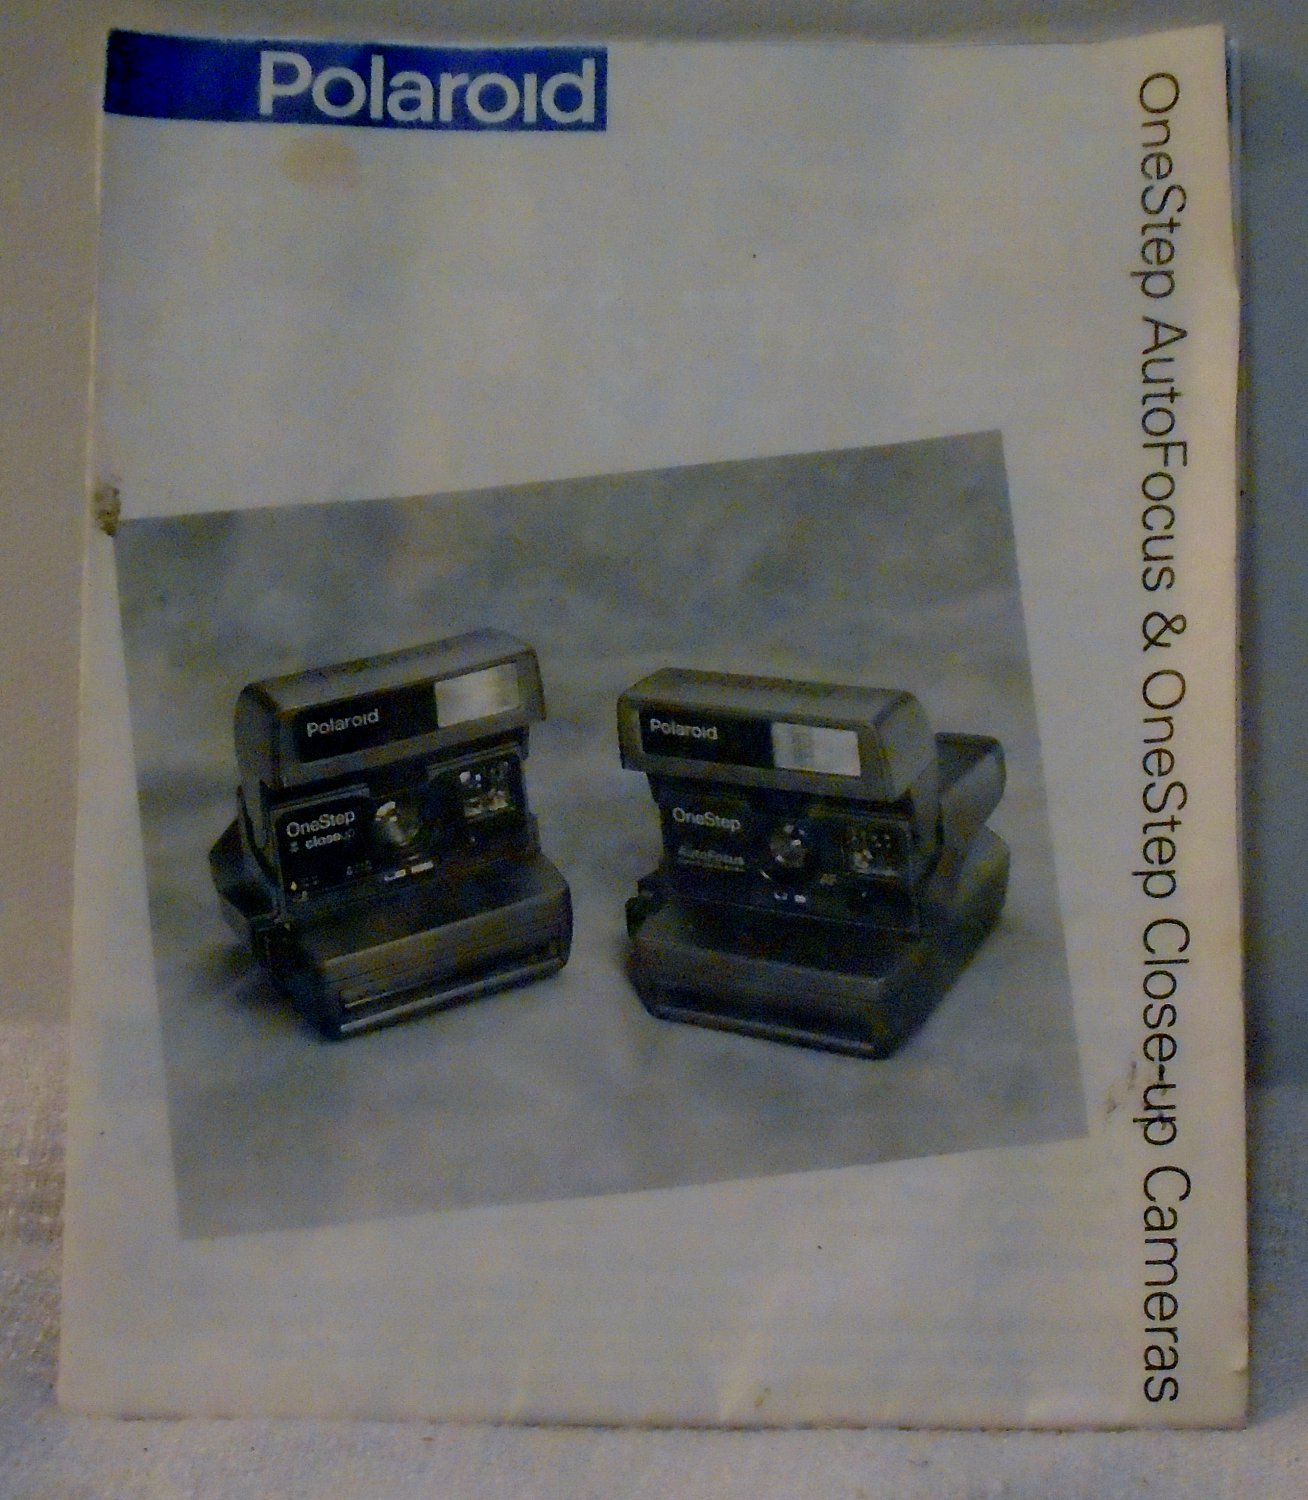 Polaroid One Step Auto Focus manual